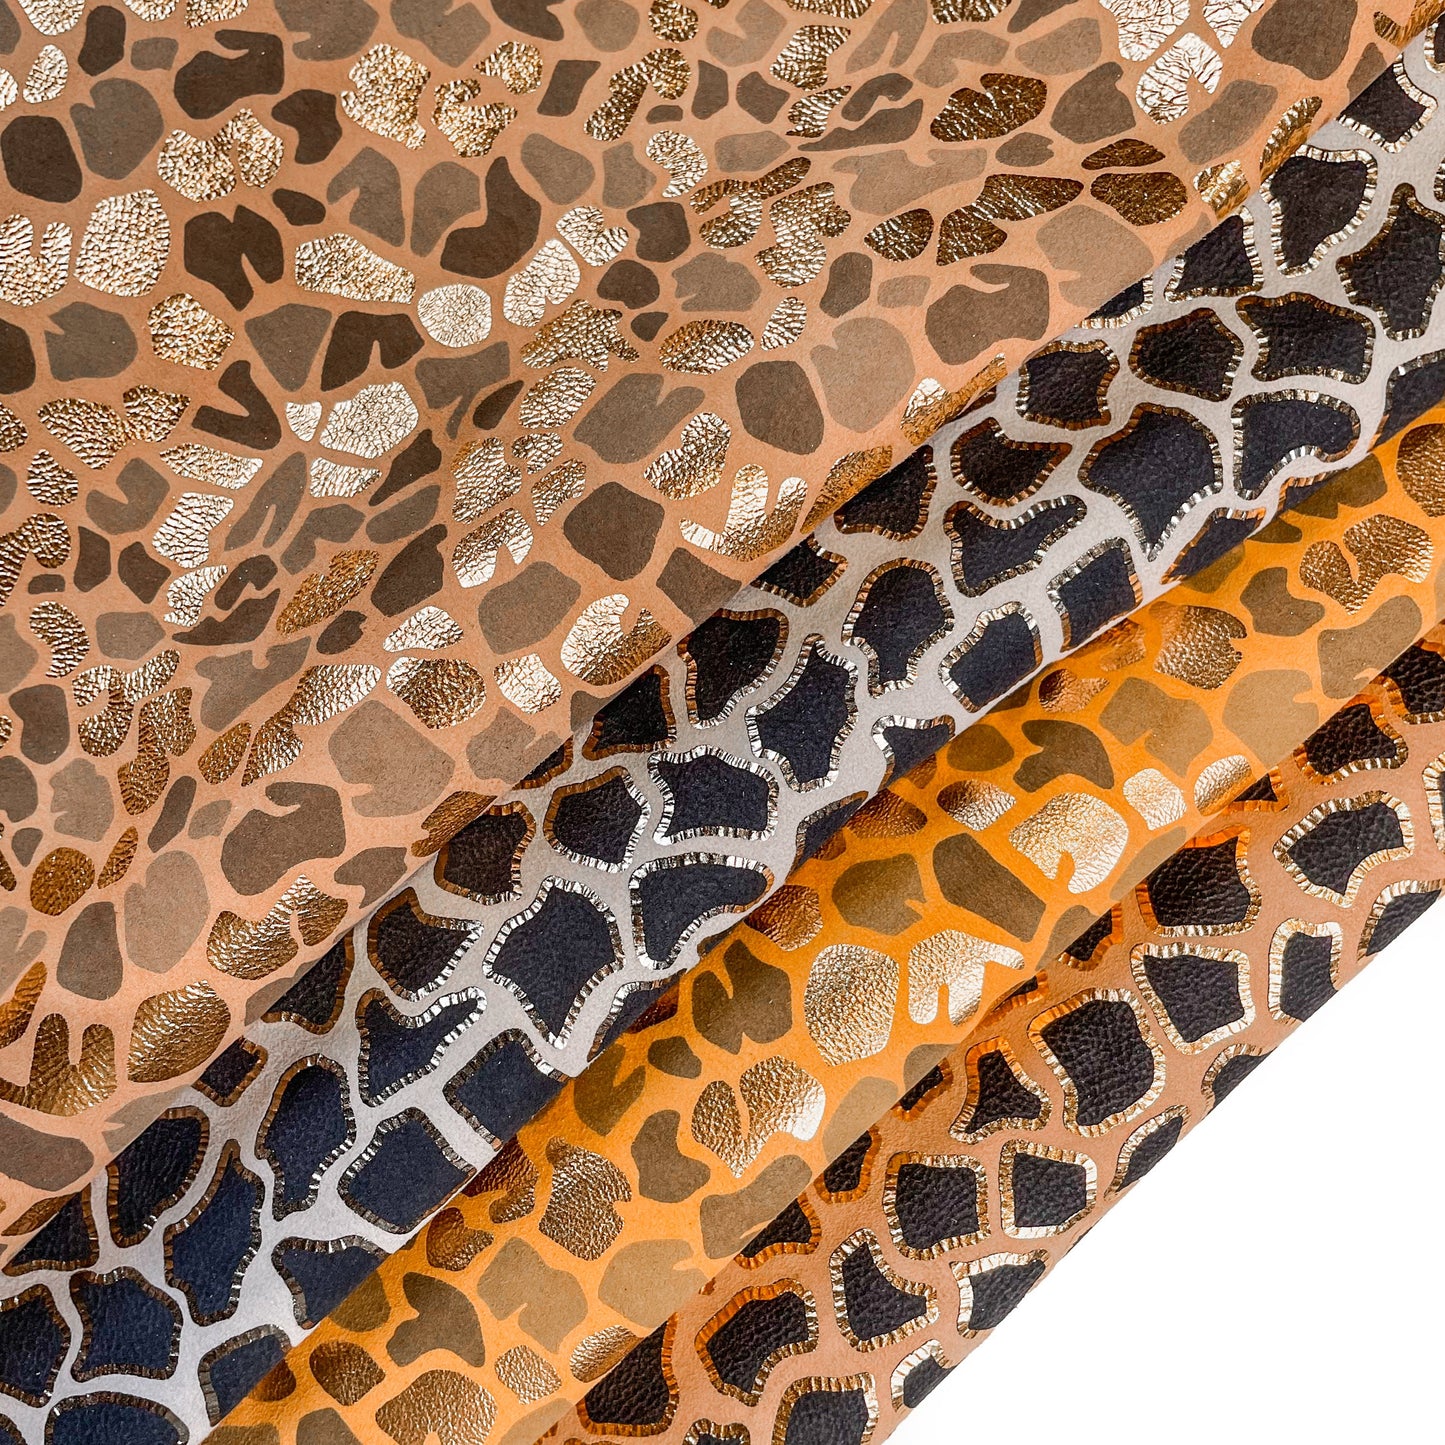 Soft Various Colors Leopard Print Lambskin 0.7 -1.0 mm/1.75-2.5oz / SPRING FLINTSTONES 1341